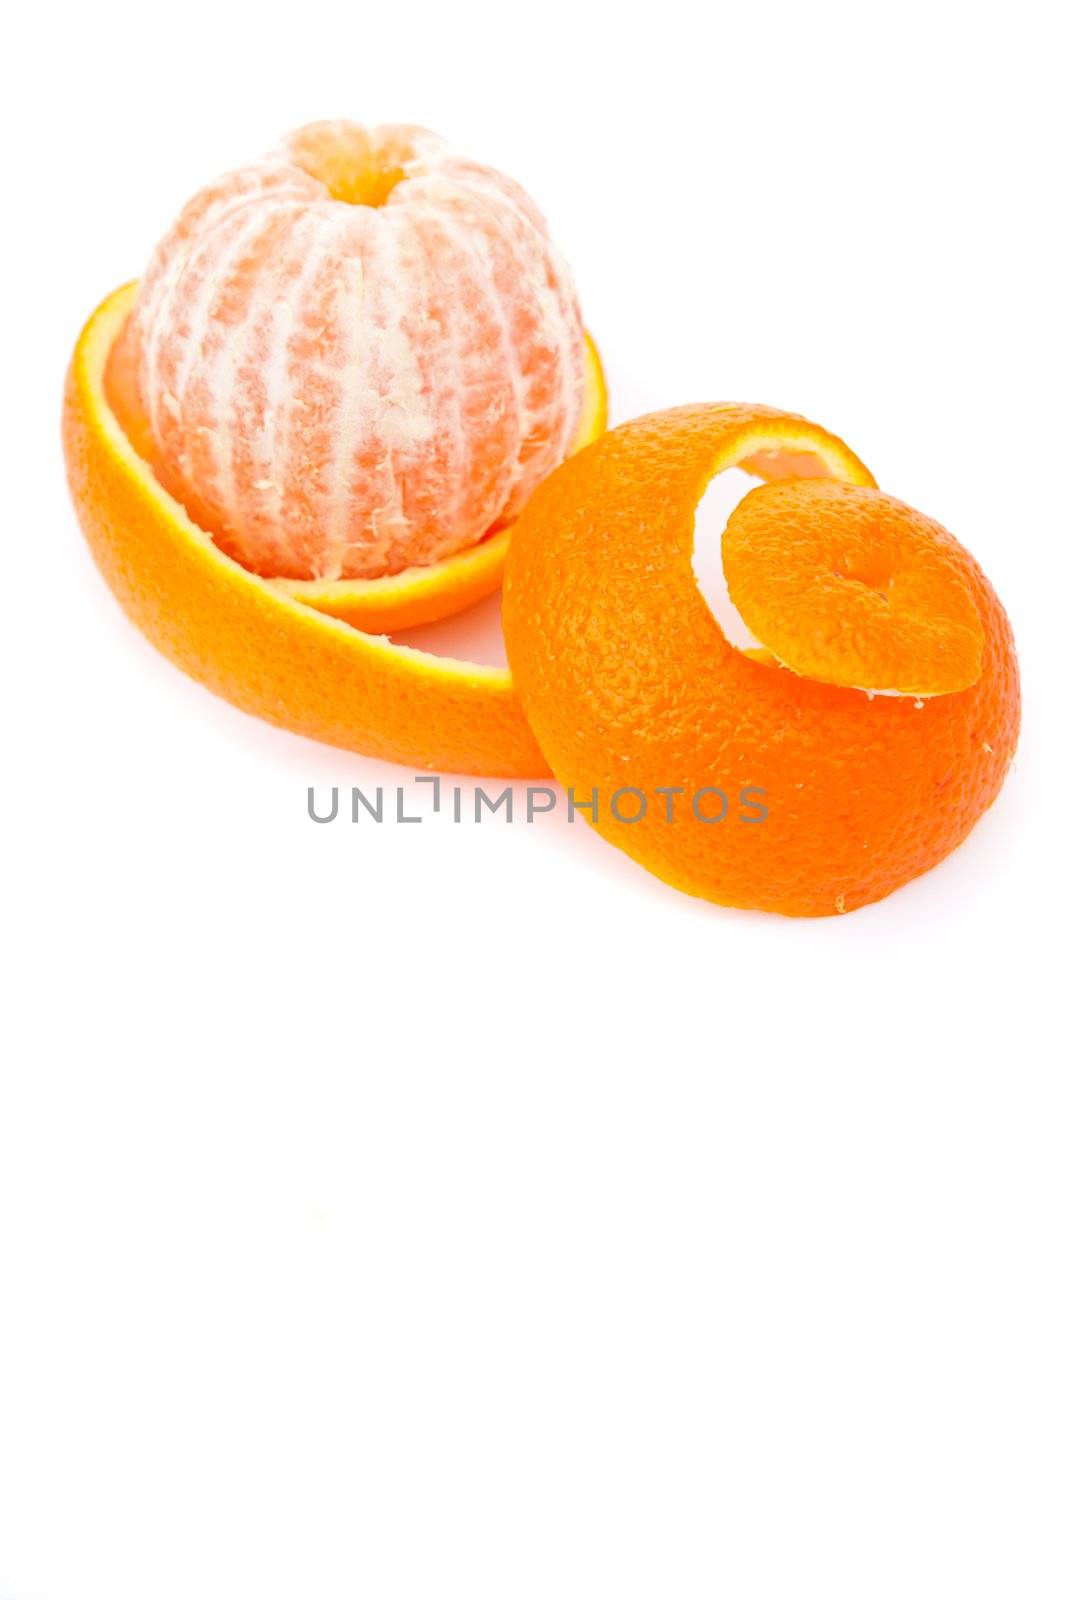 Orange surrounded by an orange peel by Wavebreakmedia